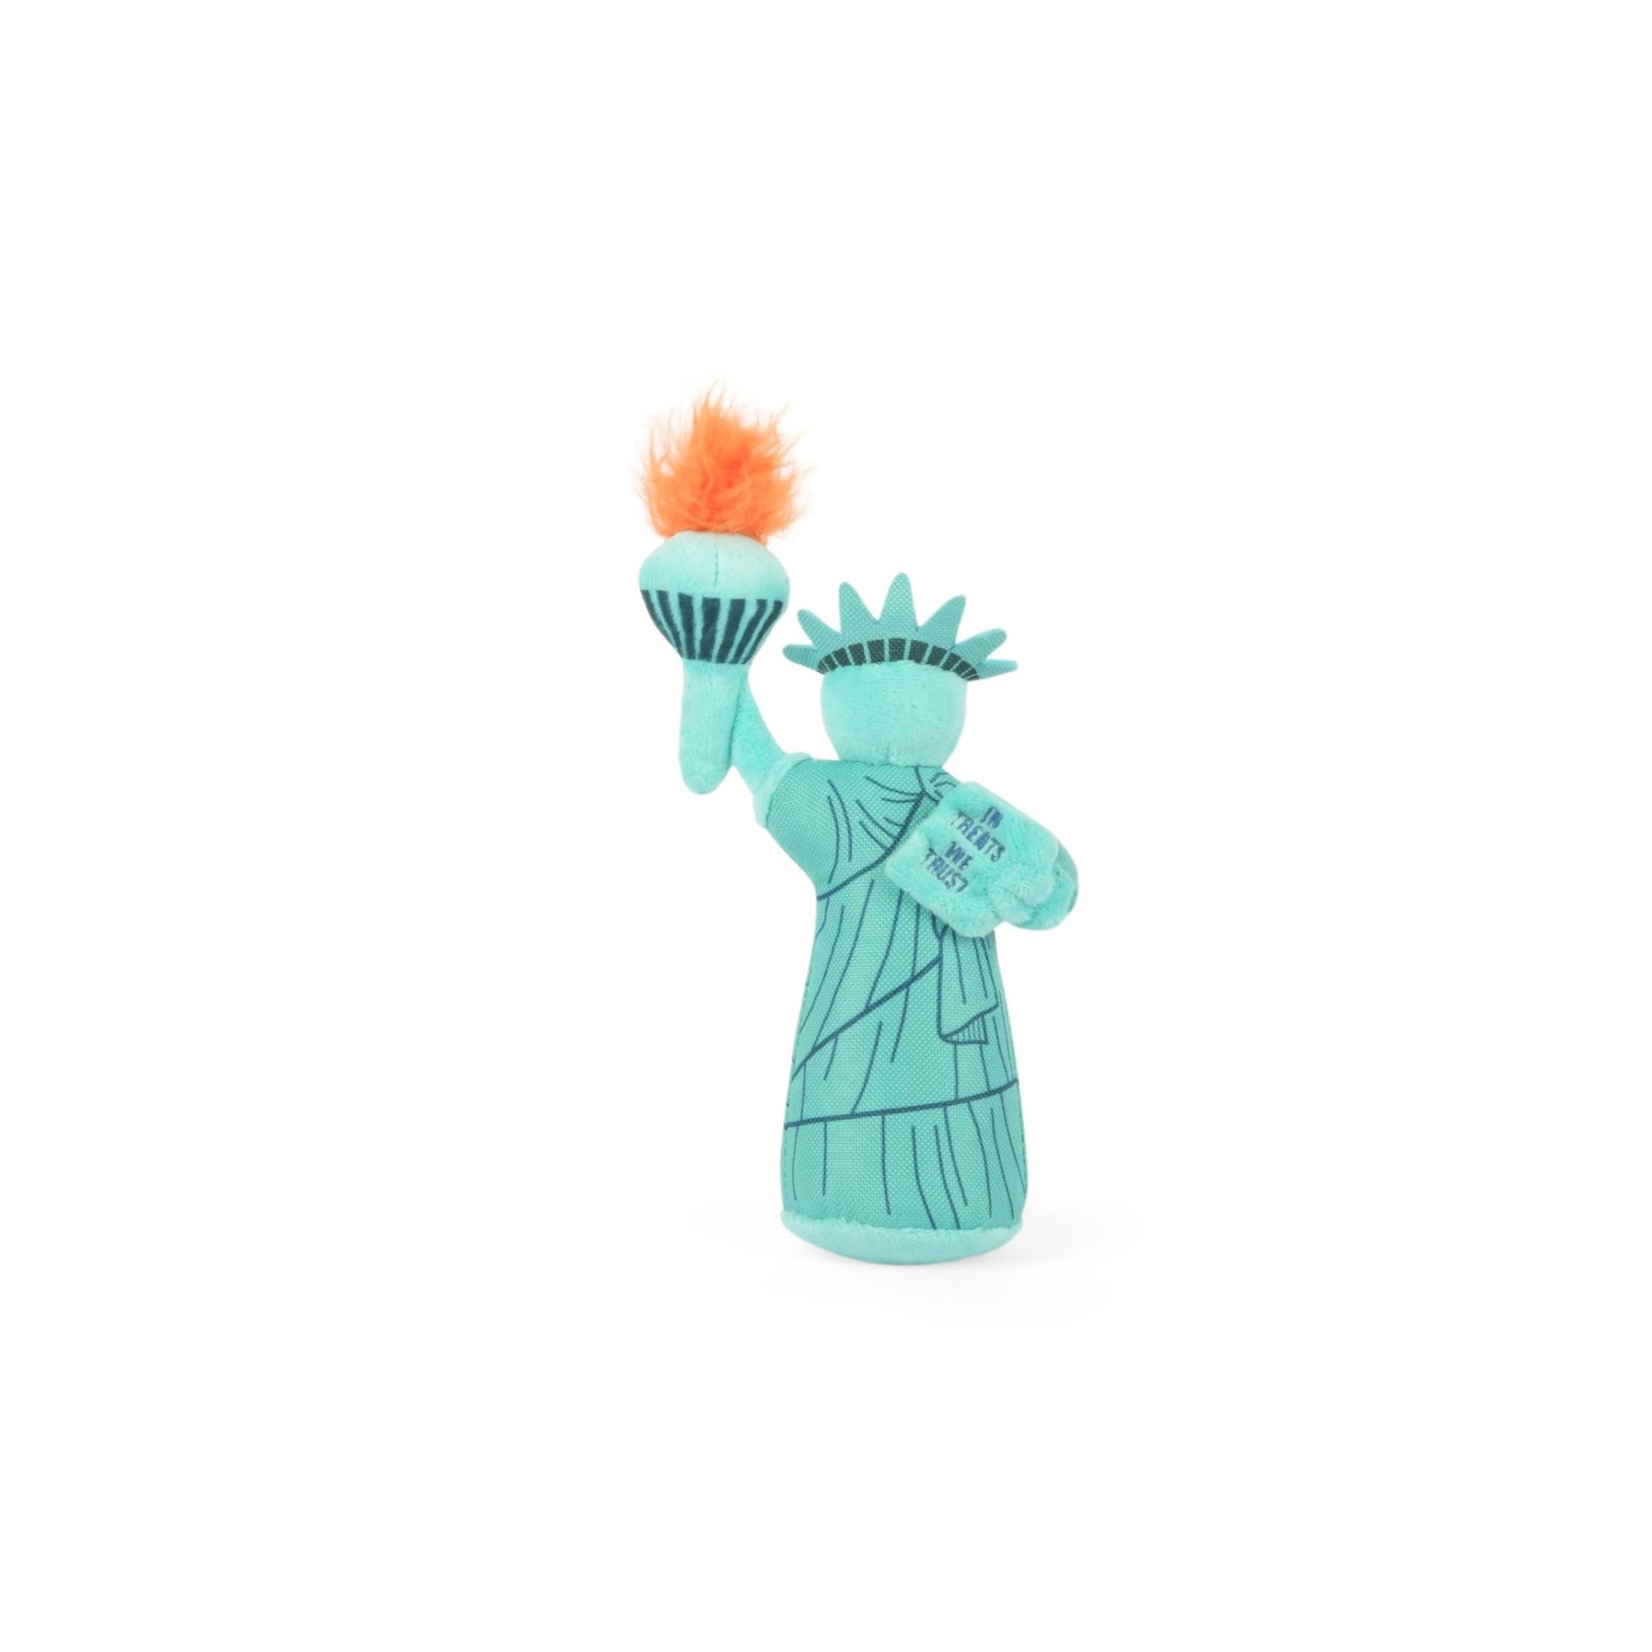 PLAY PLAY MINI NYC Lady Liberty